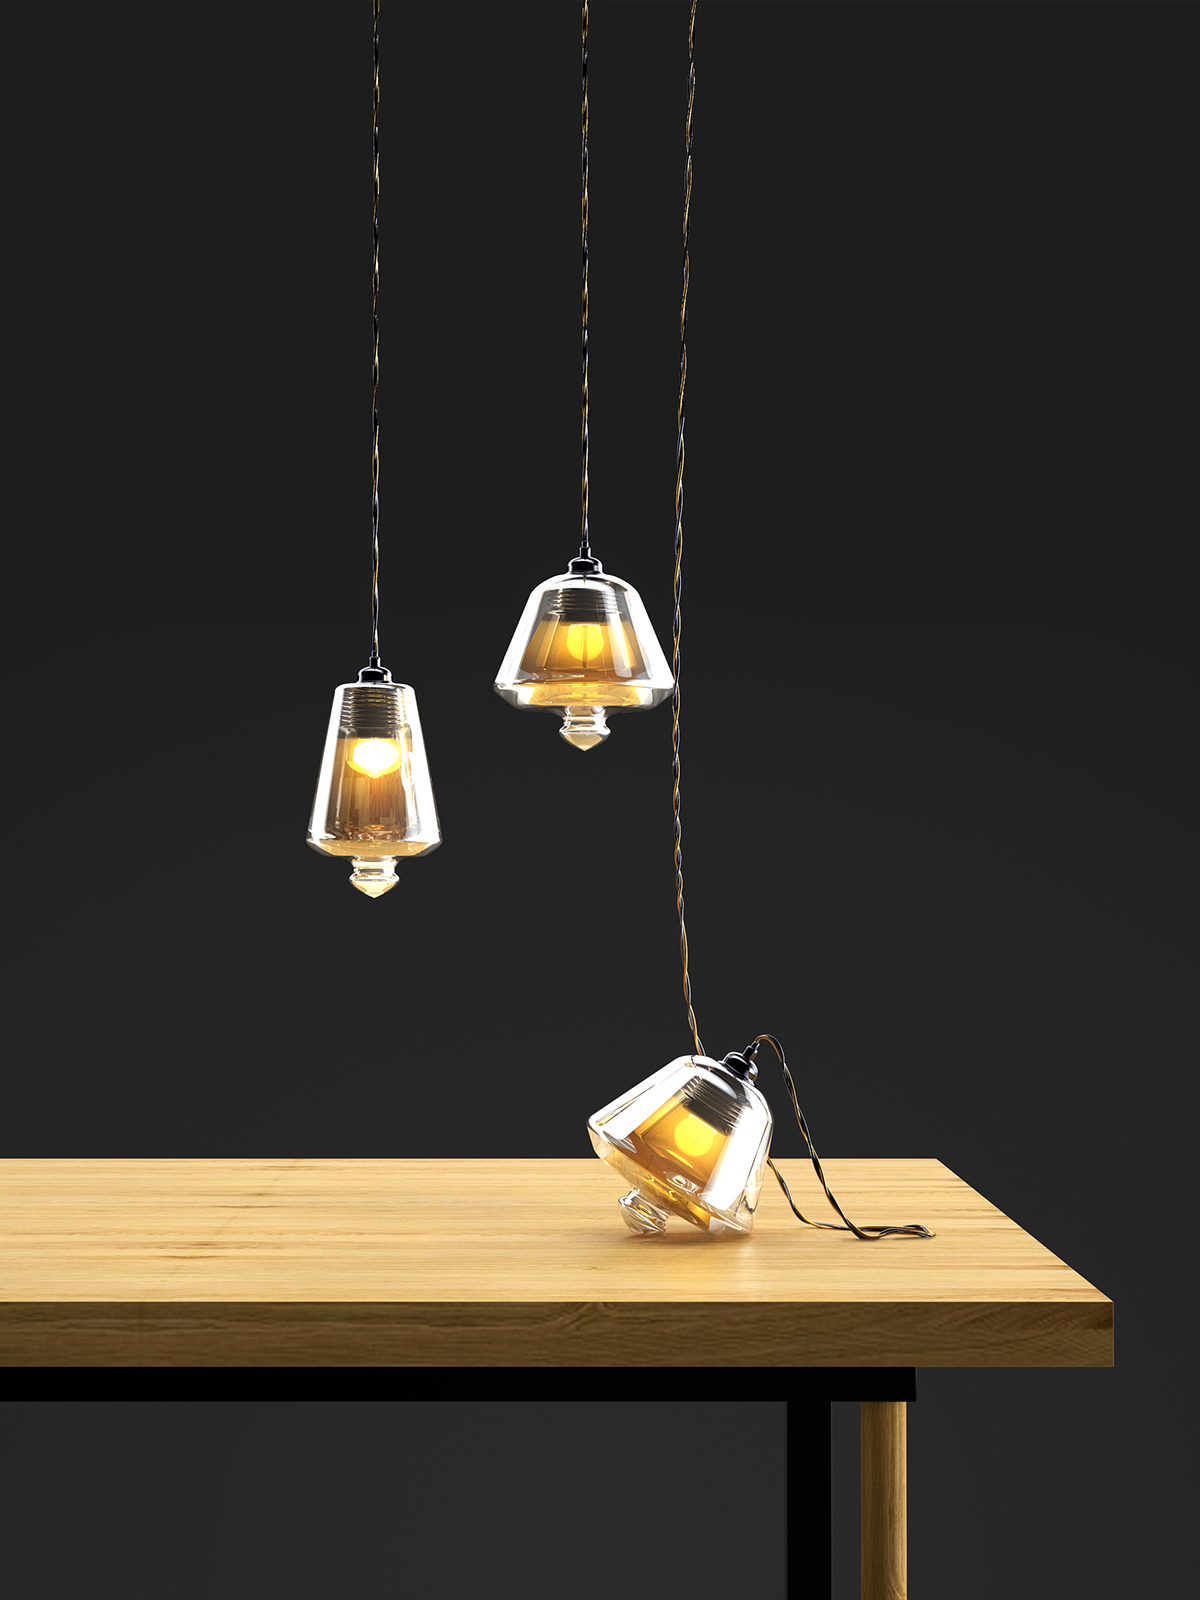 light lighting Lamp lampdesign lightdesign lamps productdesign furnituredesign industrialdesign lights